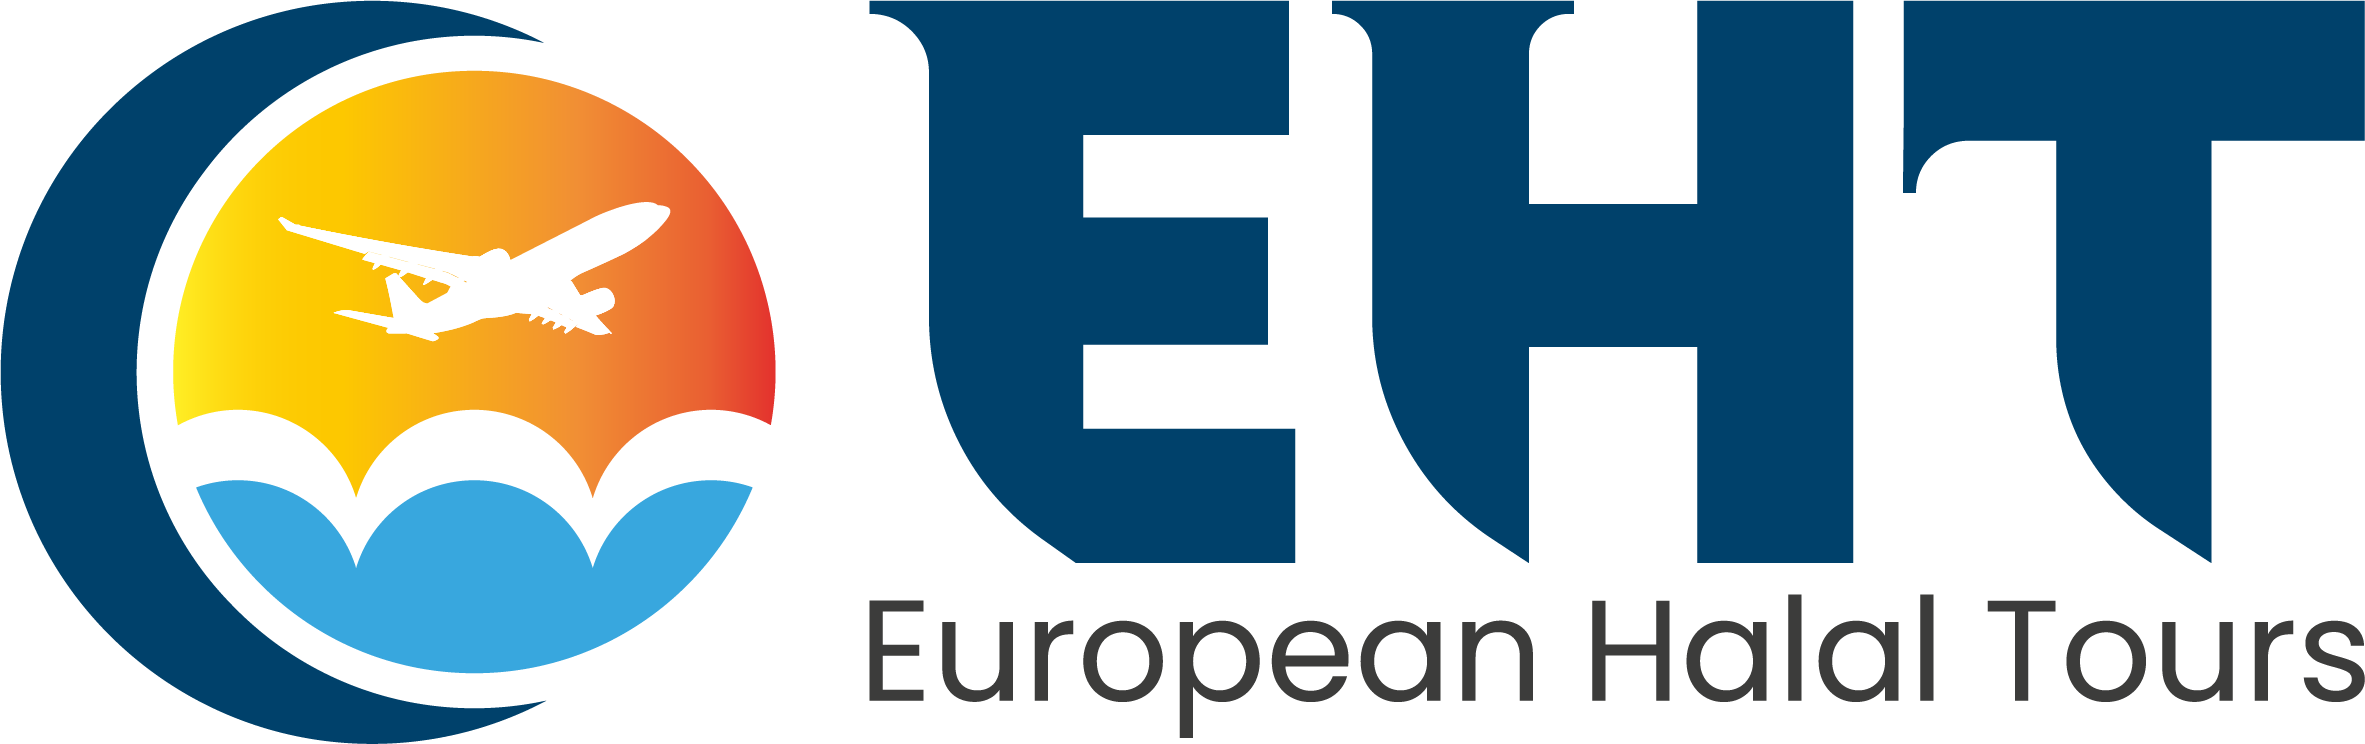 European Halal Tours Logo